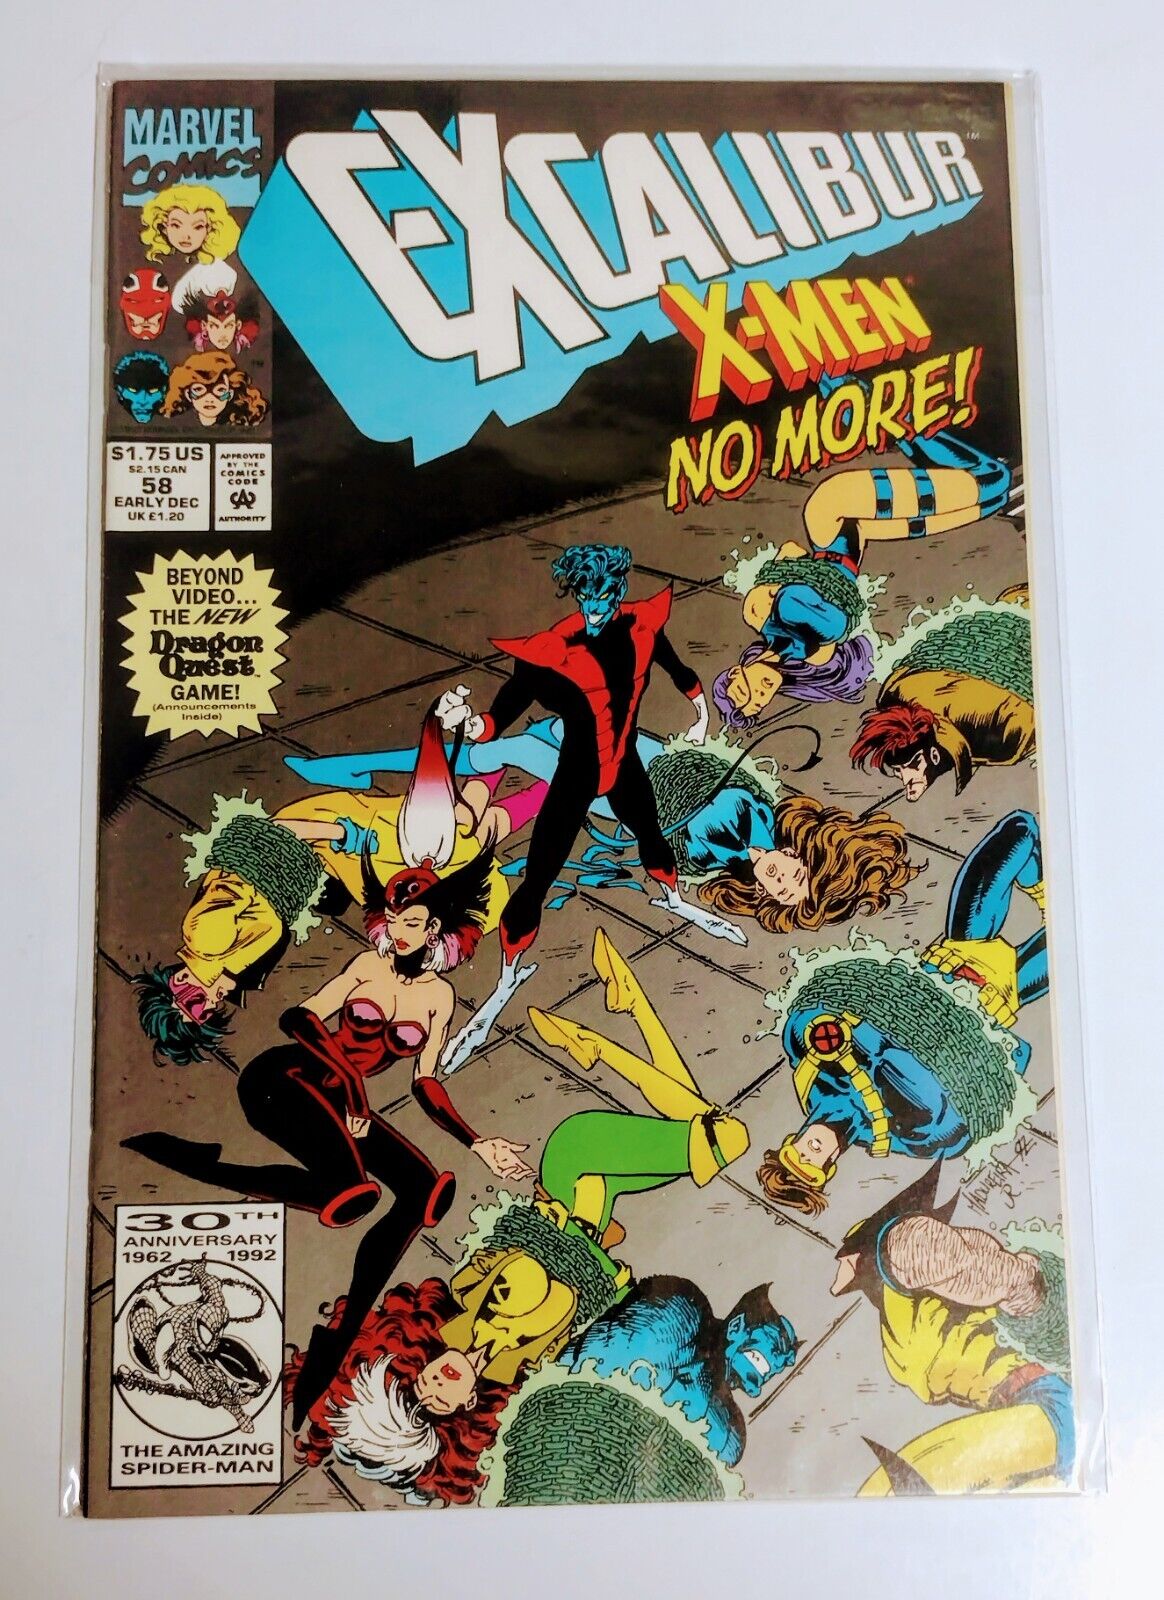 EXCALIBUR #58 Early December 1992 Marvel Comics Book X-MEN NO MORE Vintage MCU